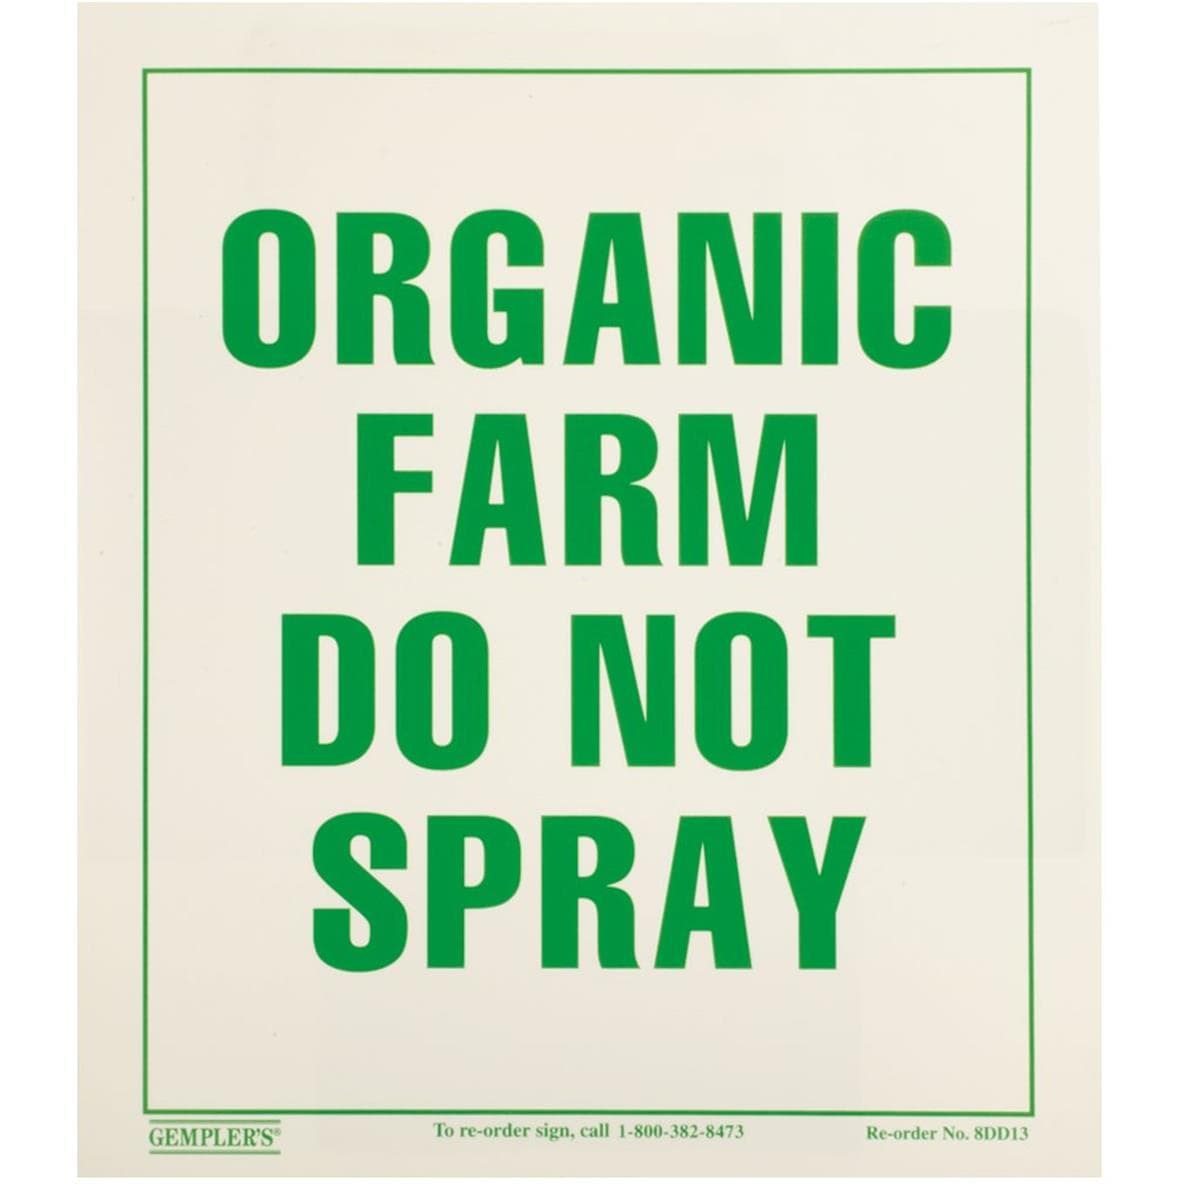 GEMPLER'S "Organic Farm - Do Not Spray" Sign